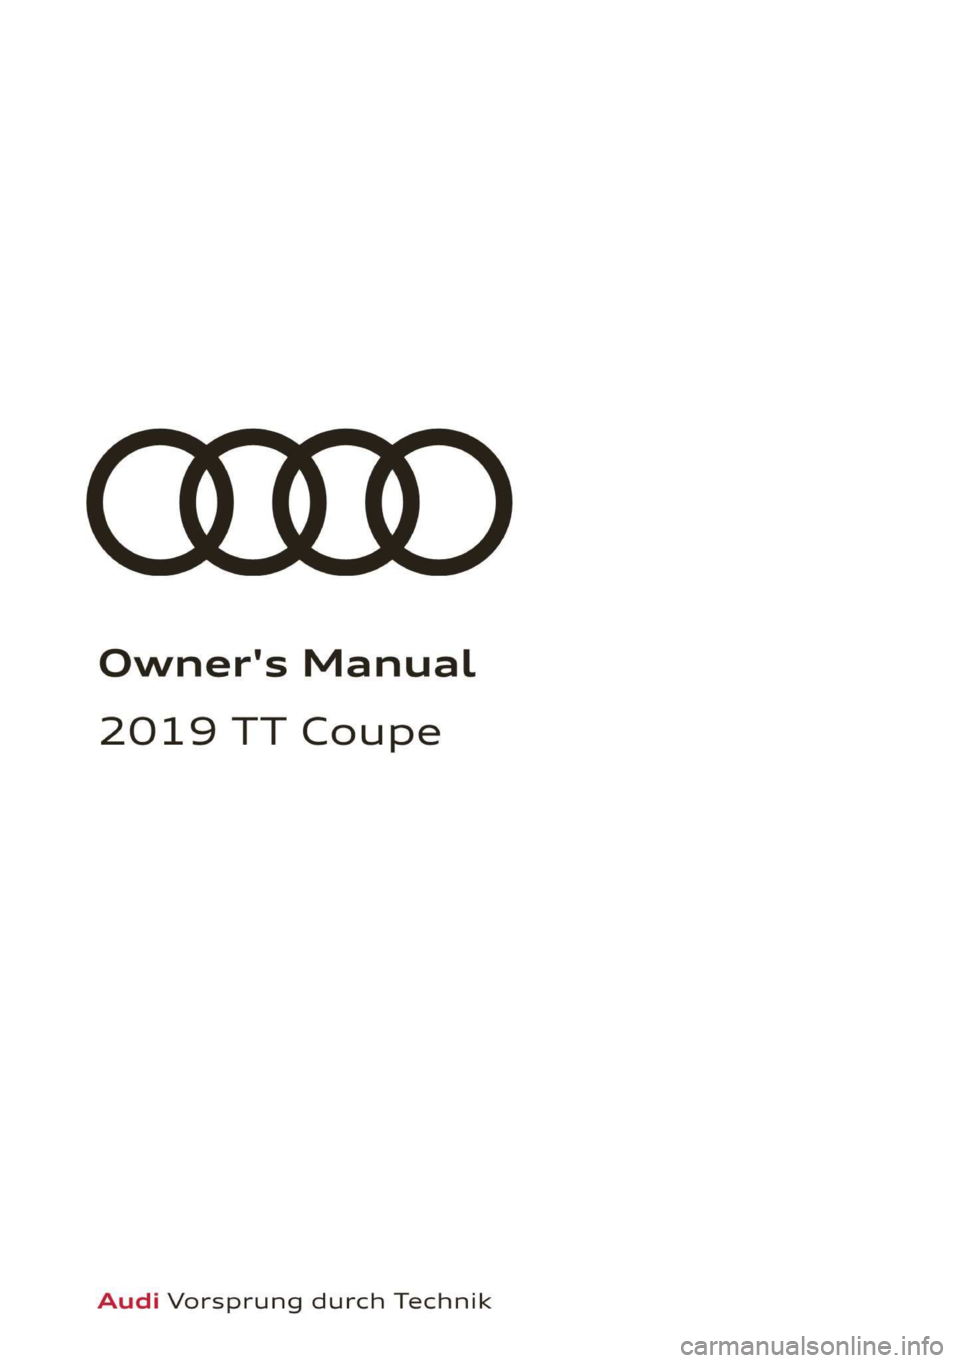 AUDI TT COUPE 2019  Owners Manual Owner'sManual
2019TTCoupe
AudiVorsprungdurchTechnik  